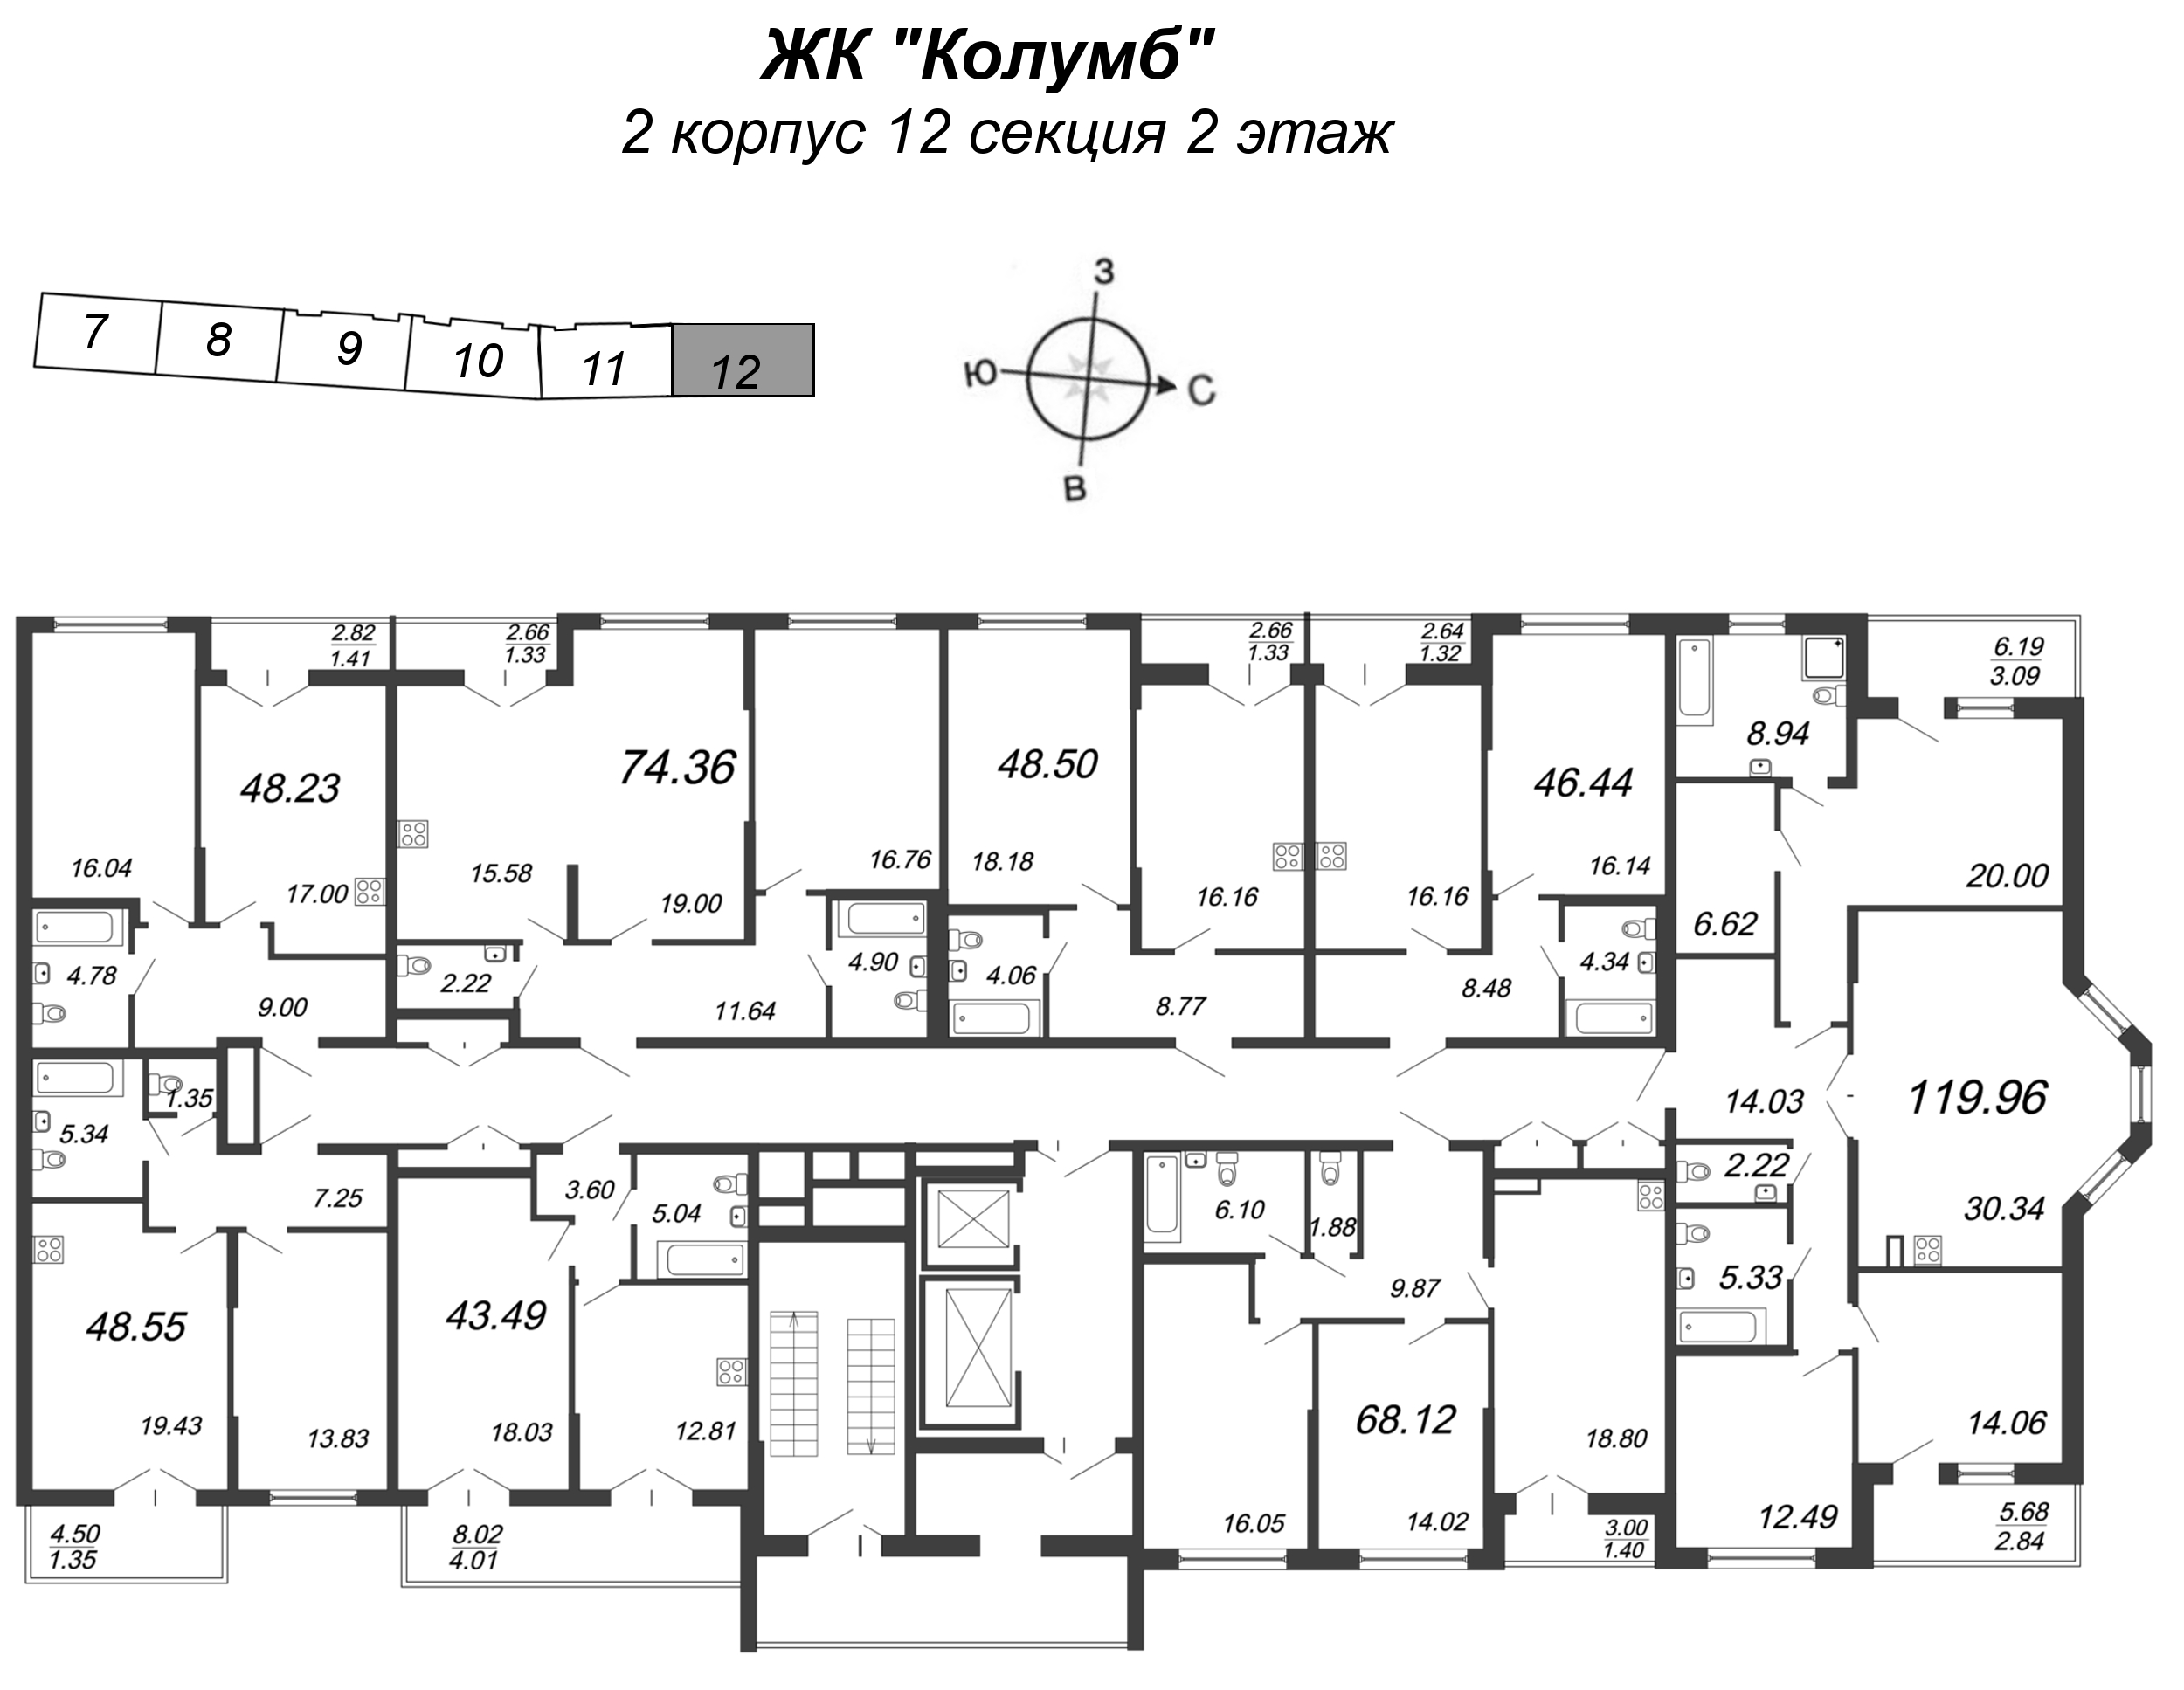 4-комнатная (Евро) квартира, 120.6 м² - планировка этажа